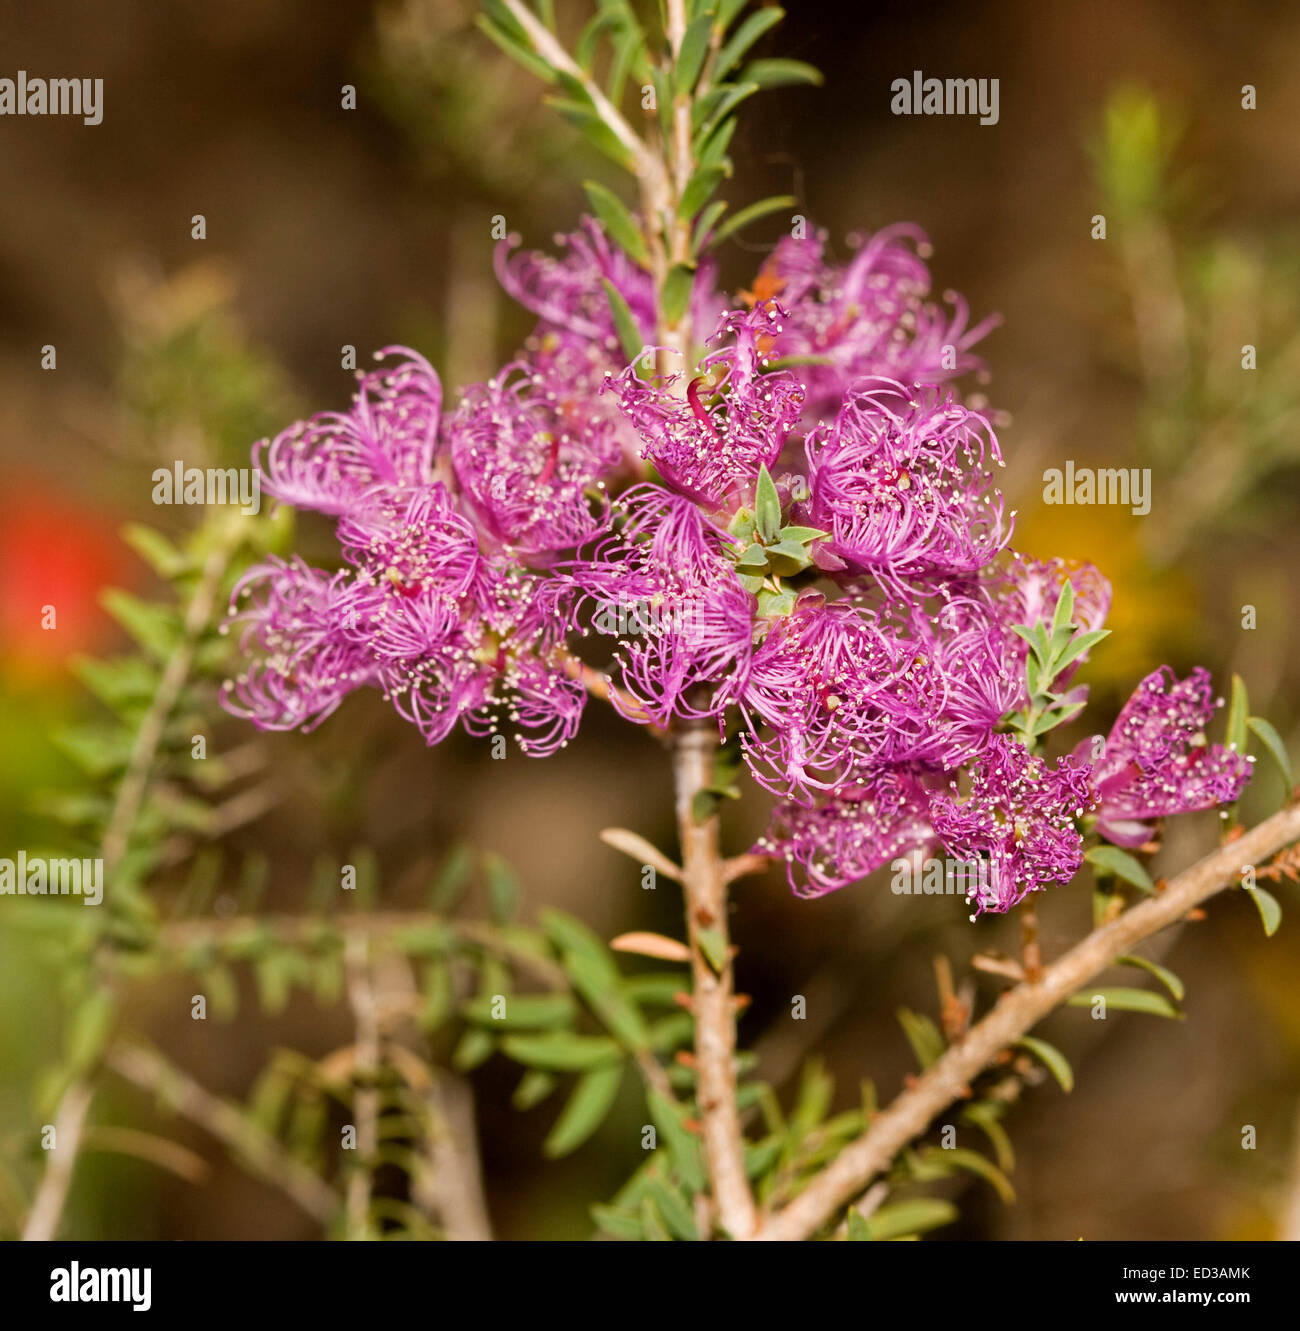 Cluster of vivid purple flowers and small green leaves of Melaleuca thymifolia, Australian native shrub / wildflowers, against dark background Stock Photo